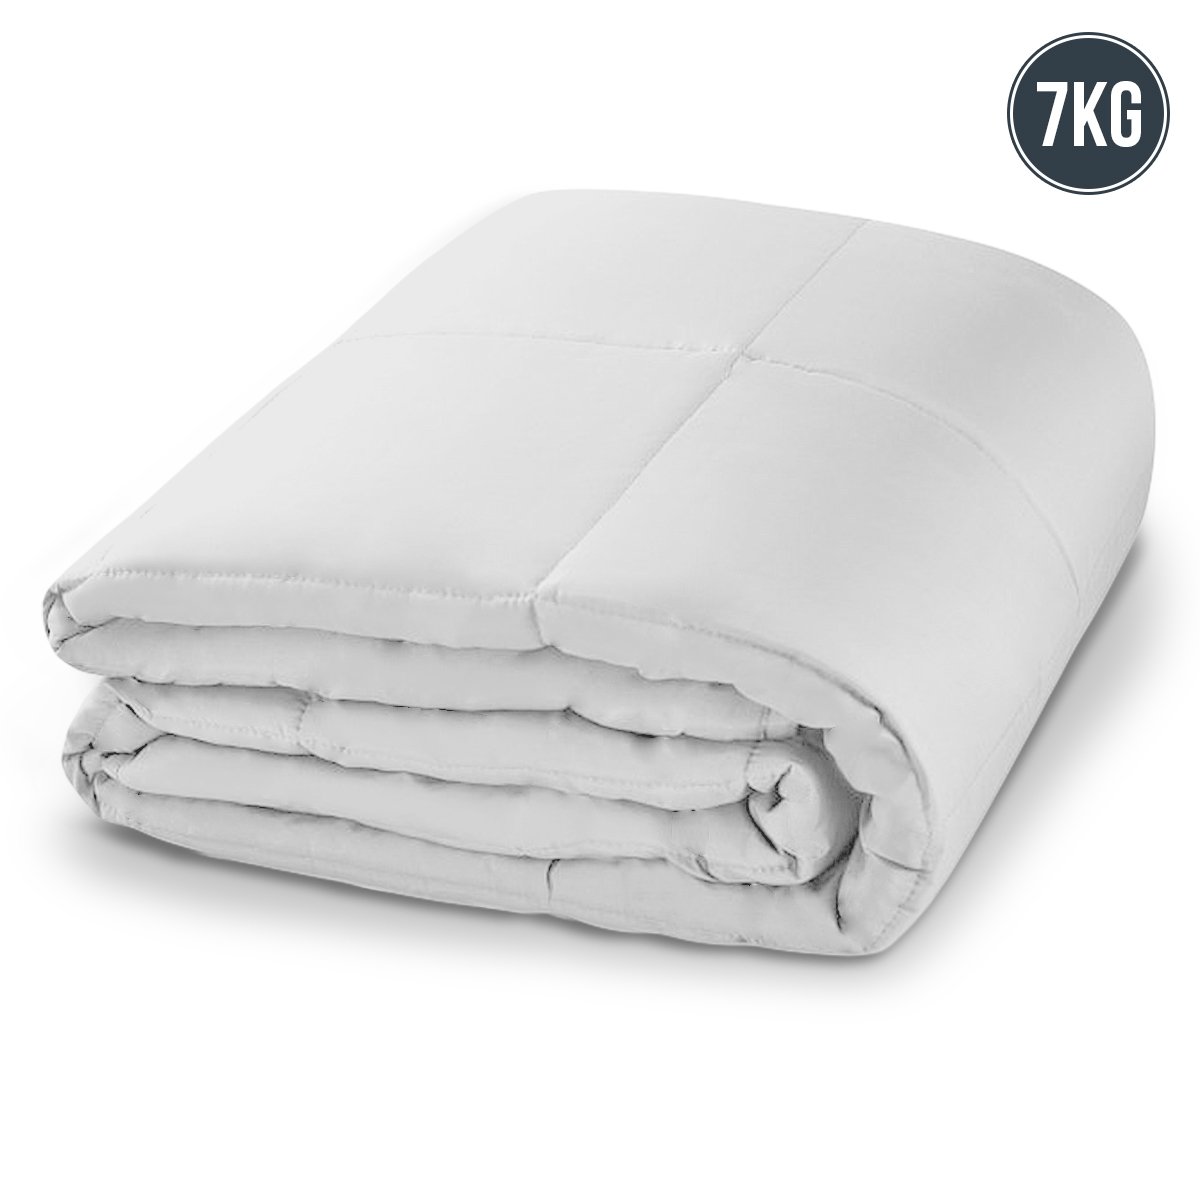 Laura Hill Weighted Blanket Heavy Quilt Doona 7Kg - White 1